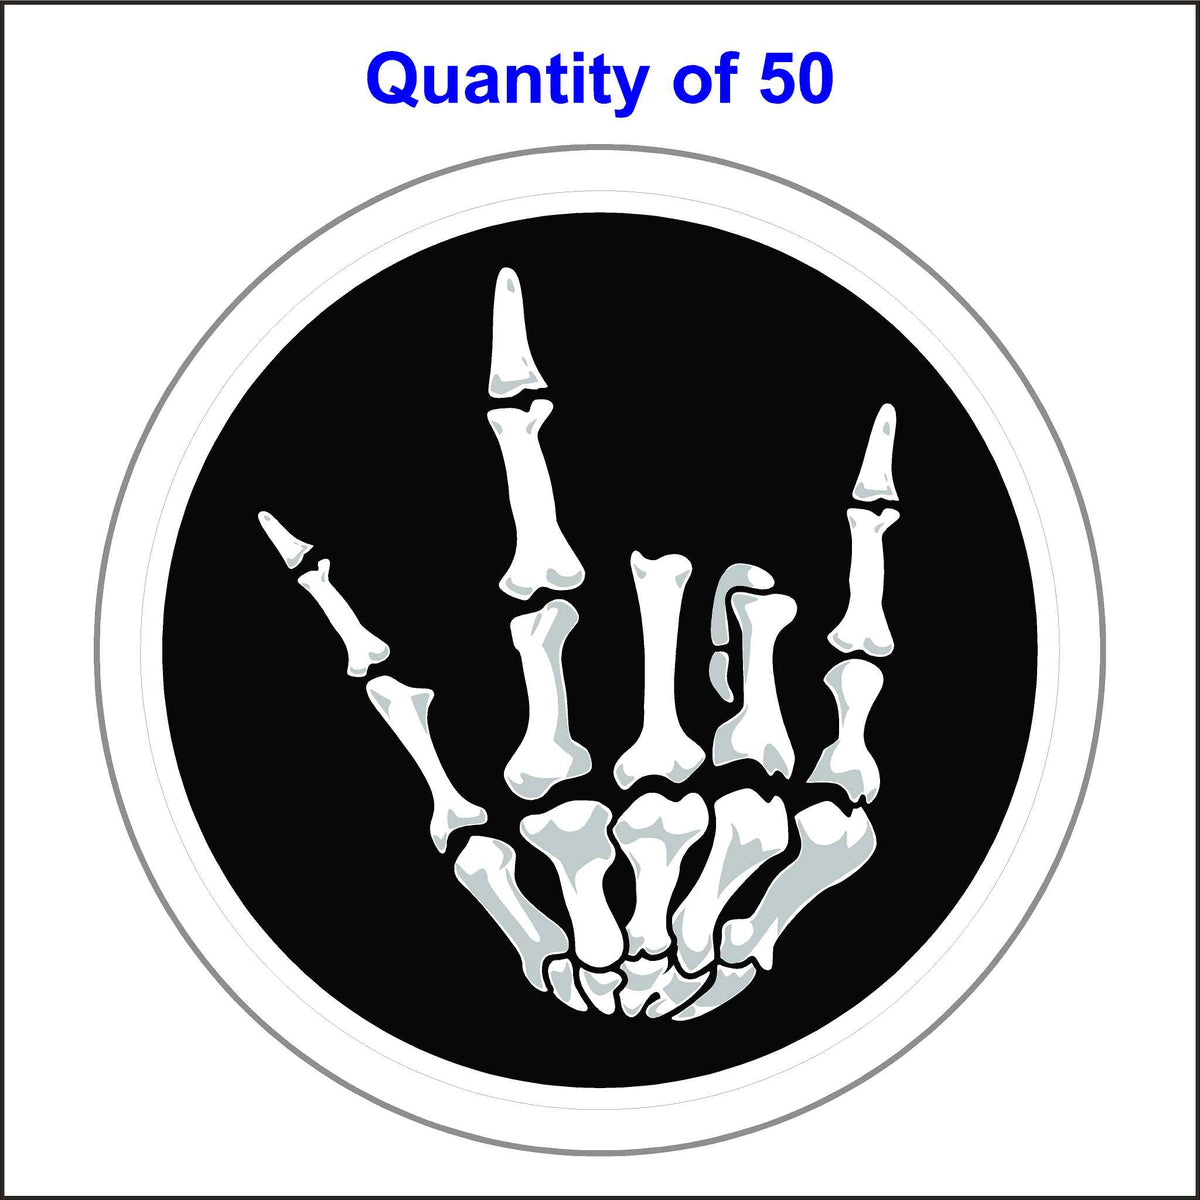 Skeleton Hand Rock on Stickers. 50 Quantity.